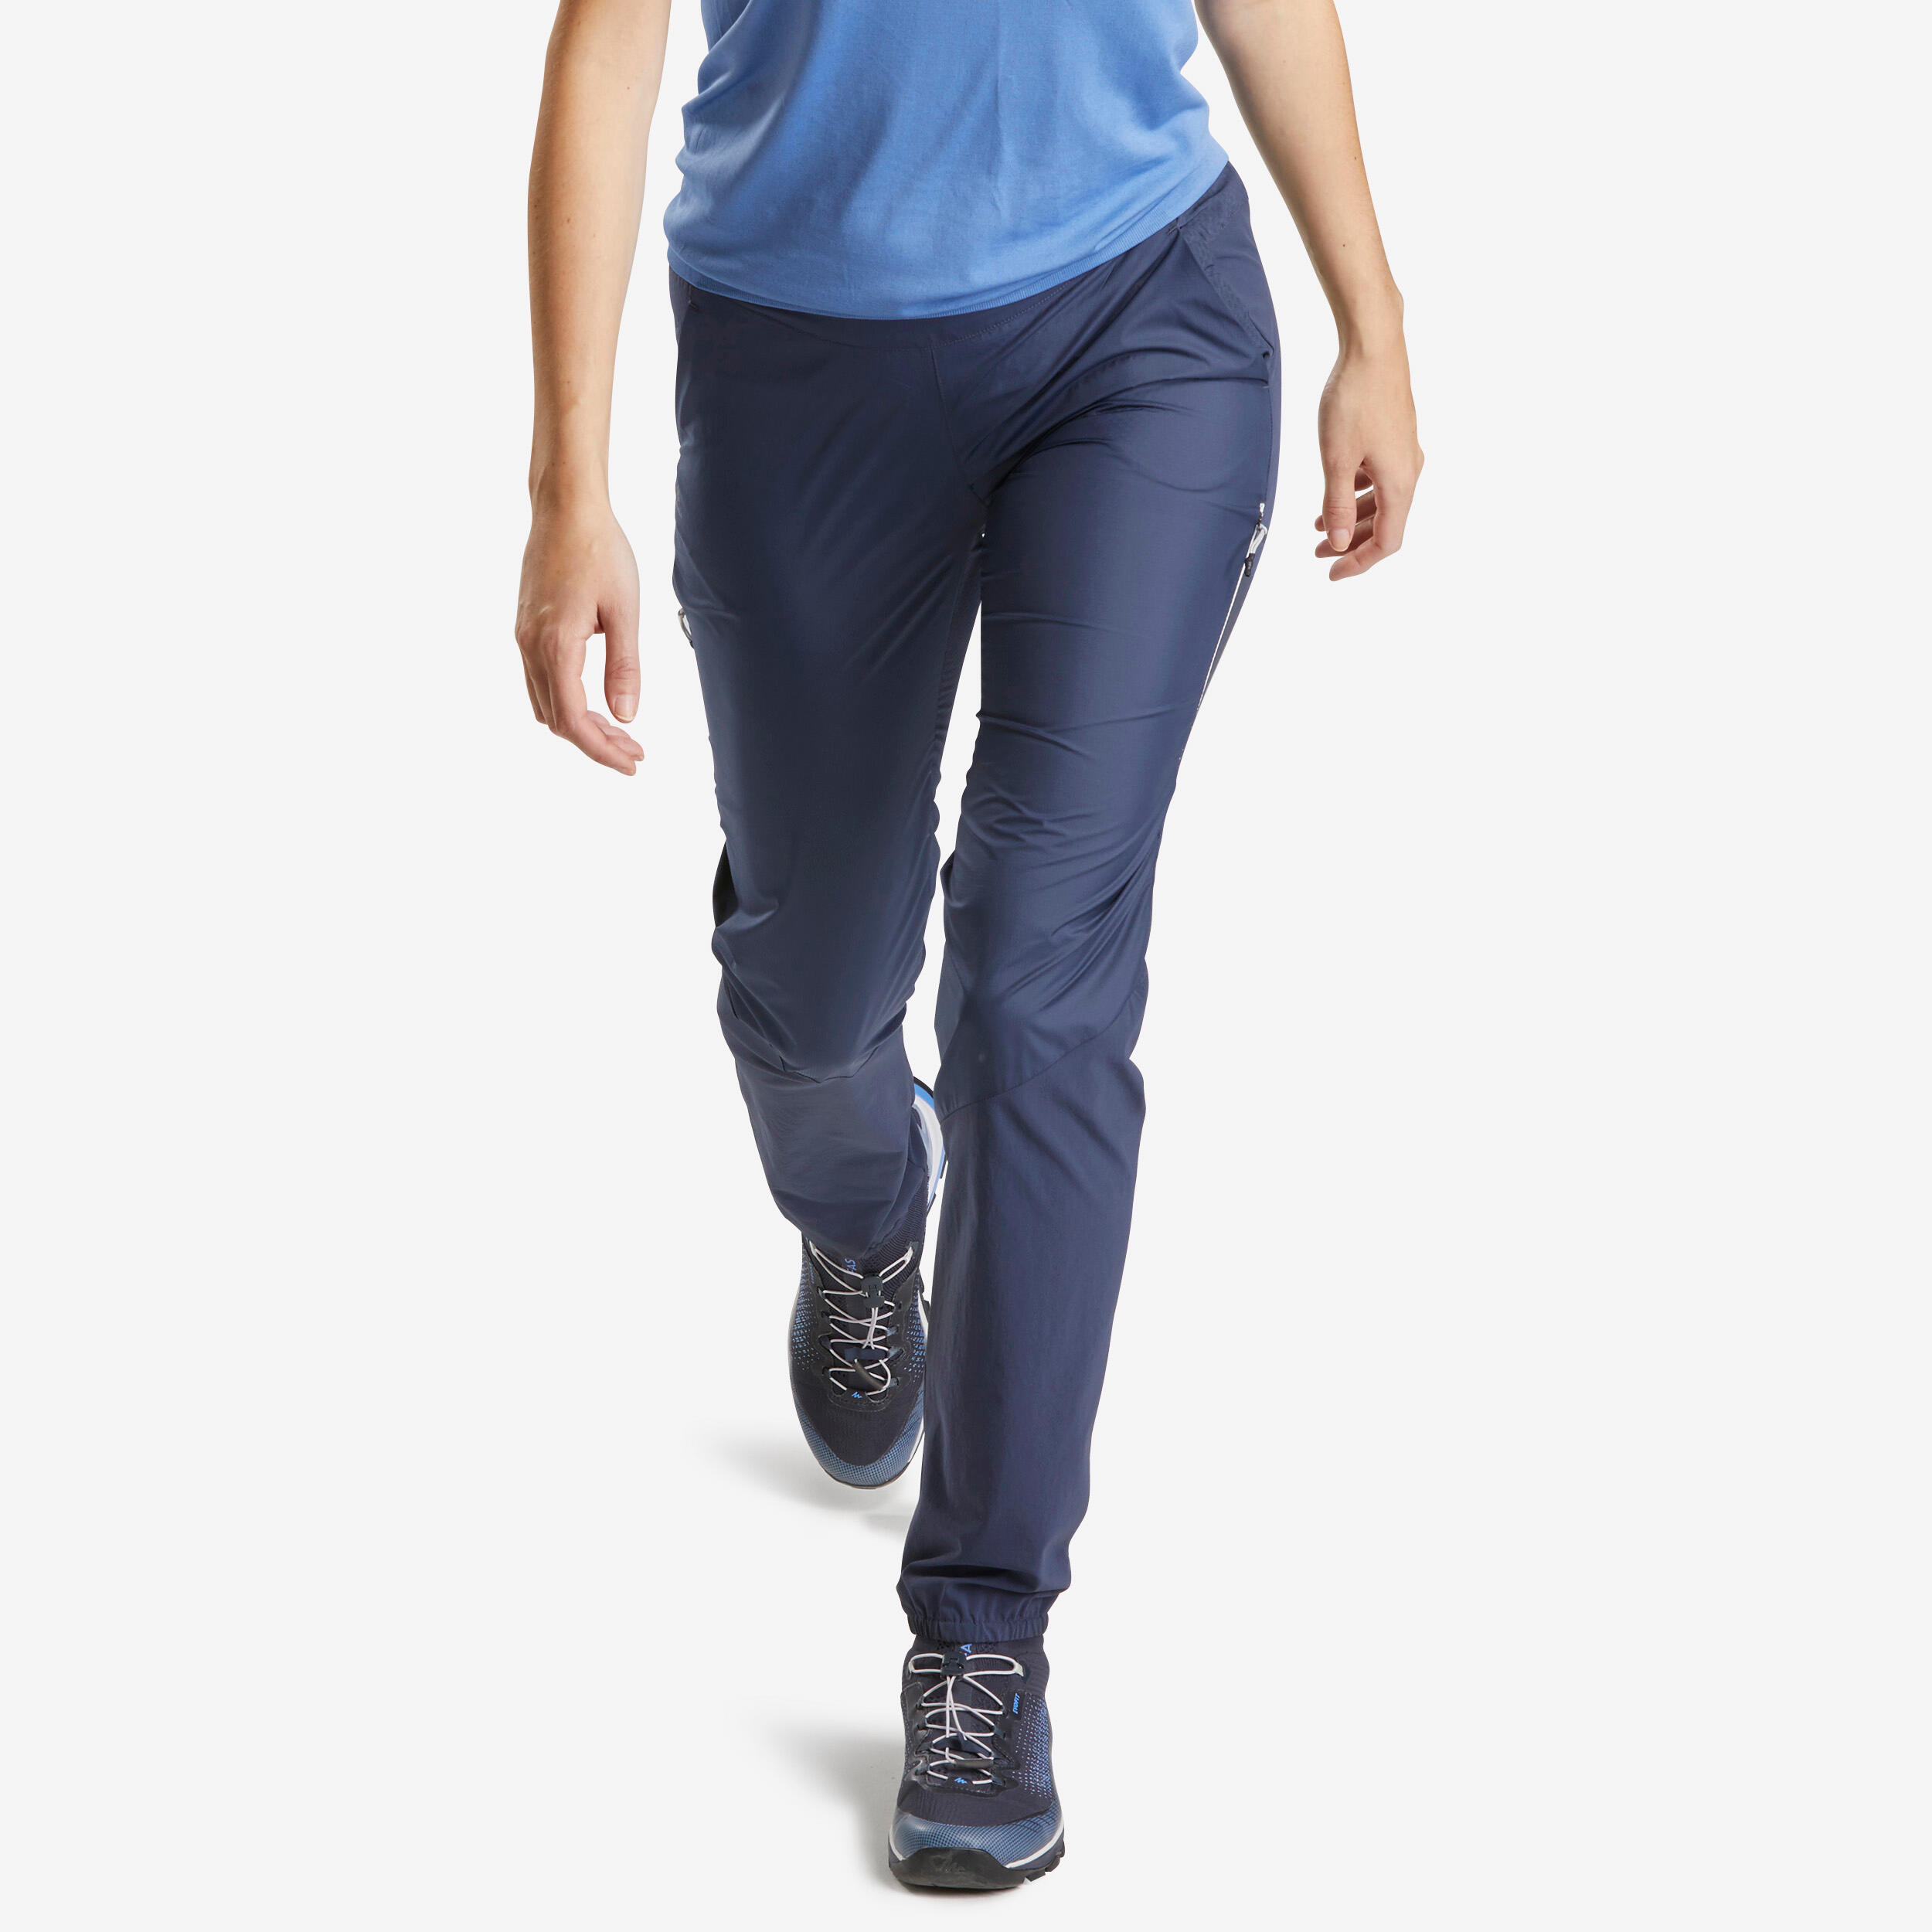 QUECHUA Ultra-light fast hiking women’s trousers FH500 blue.